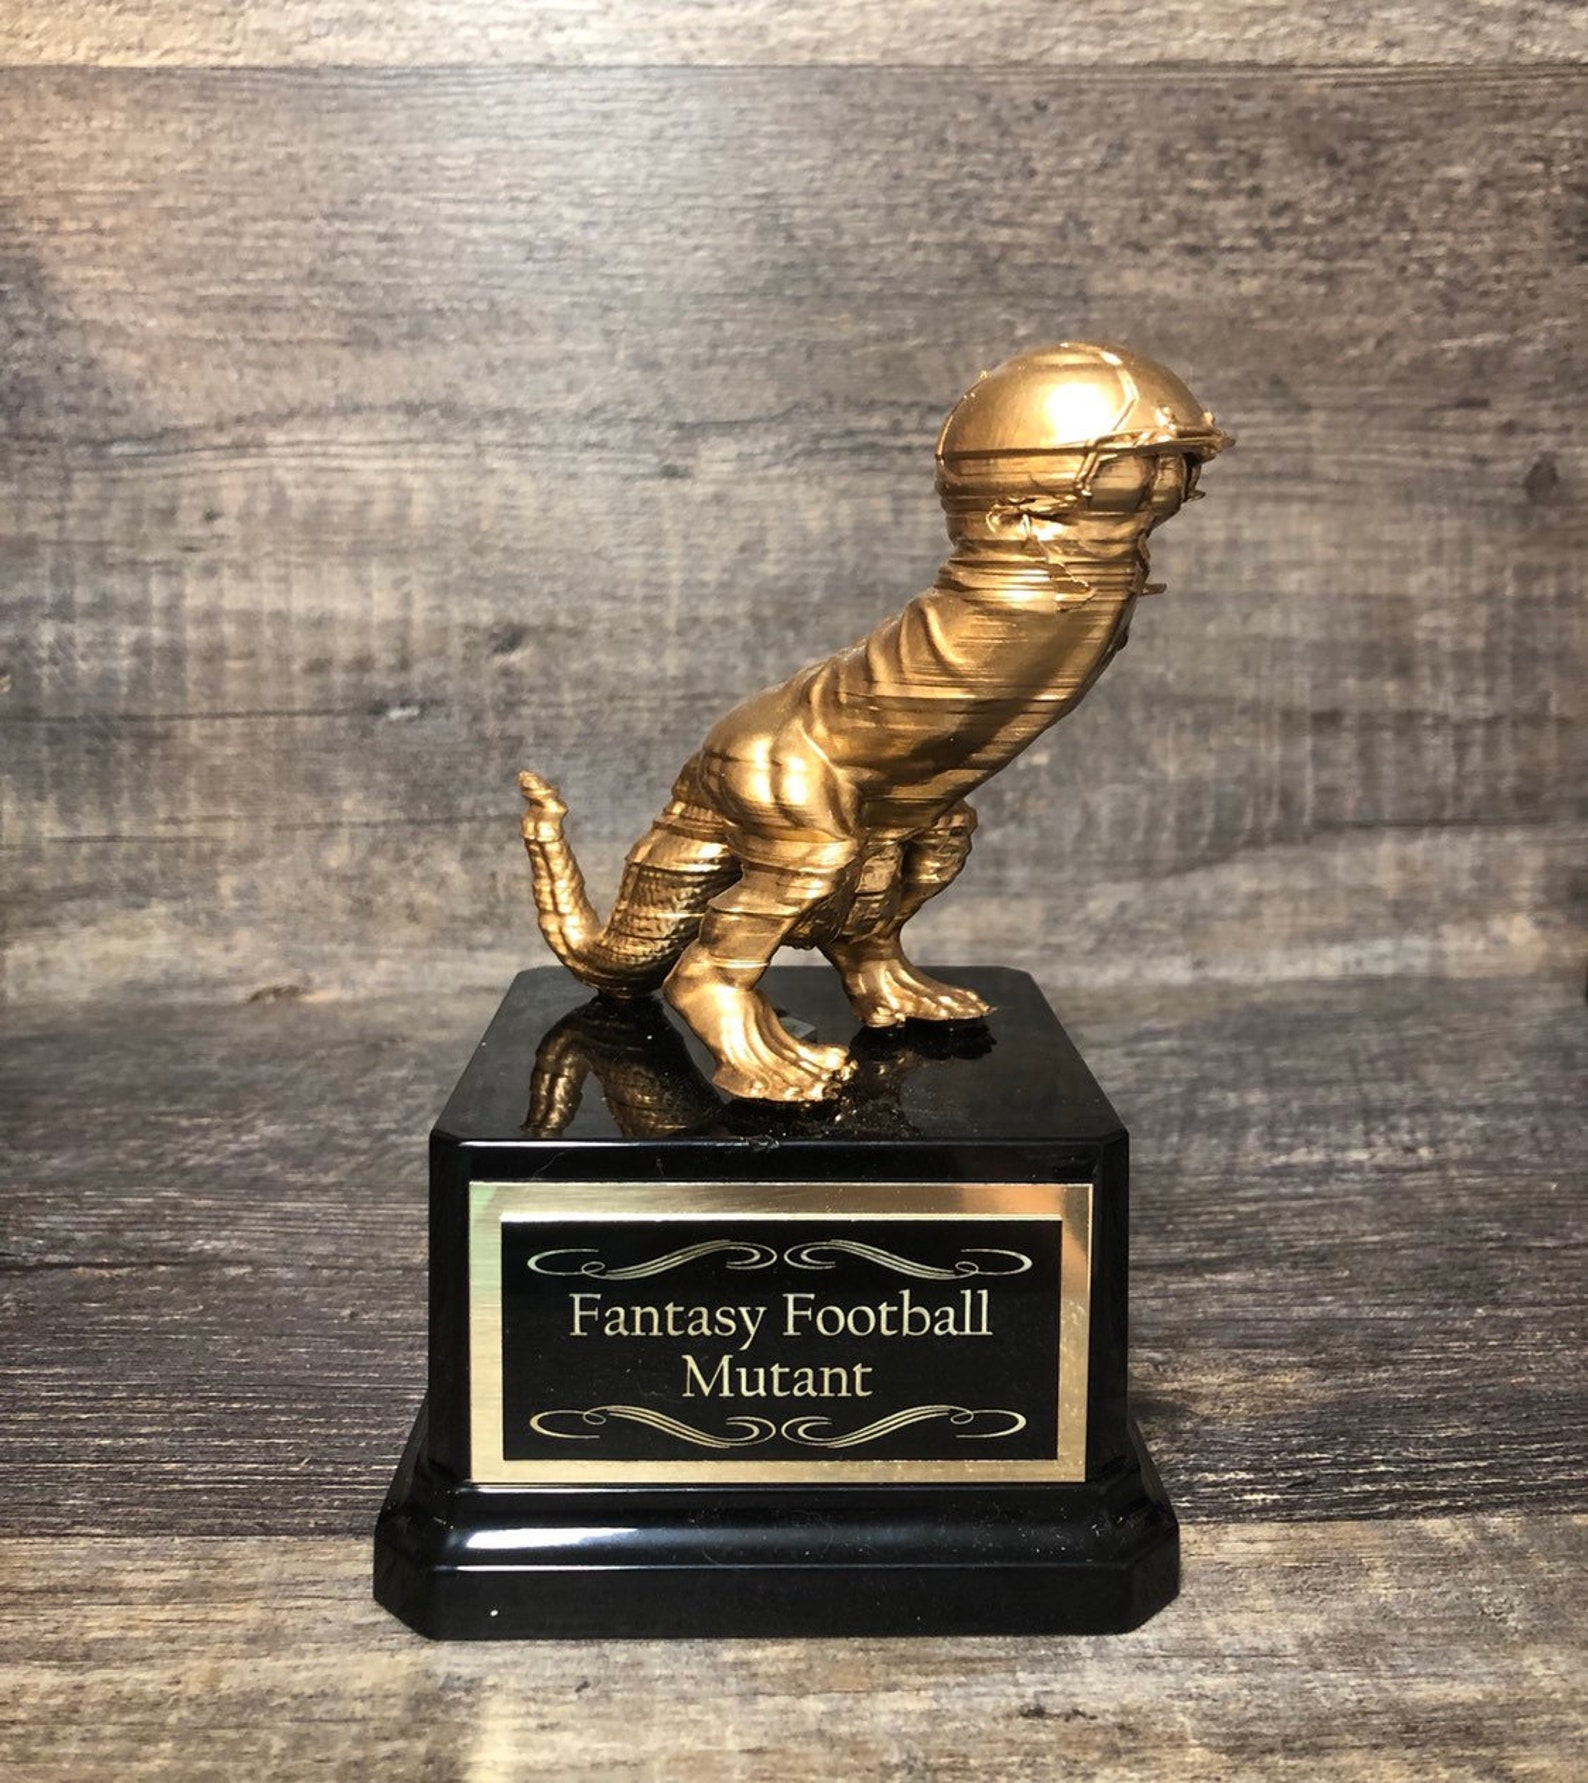 Fantasy Football Loser Trophy See Description Sacko Ffl Etsy 